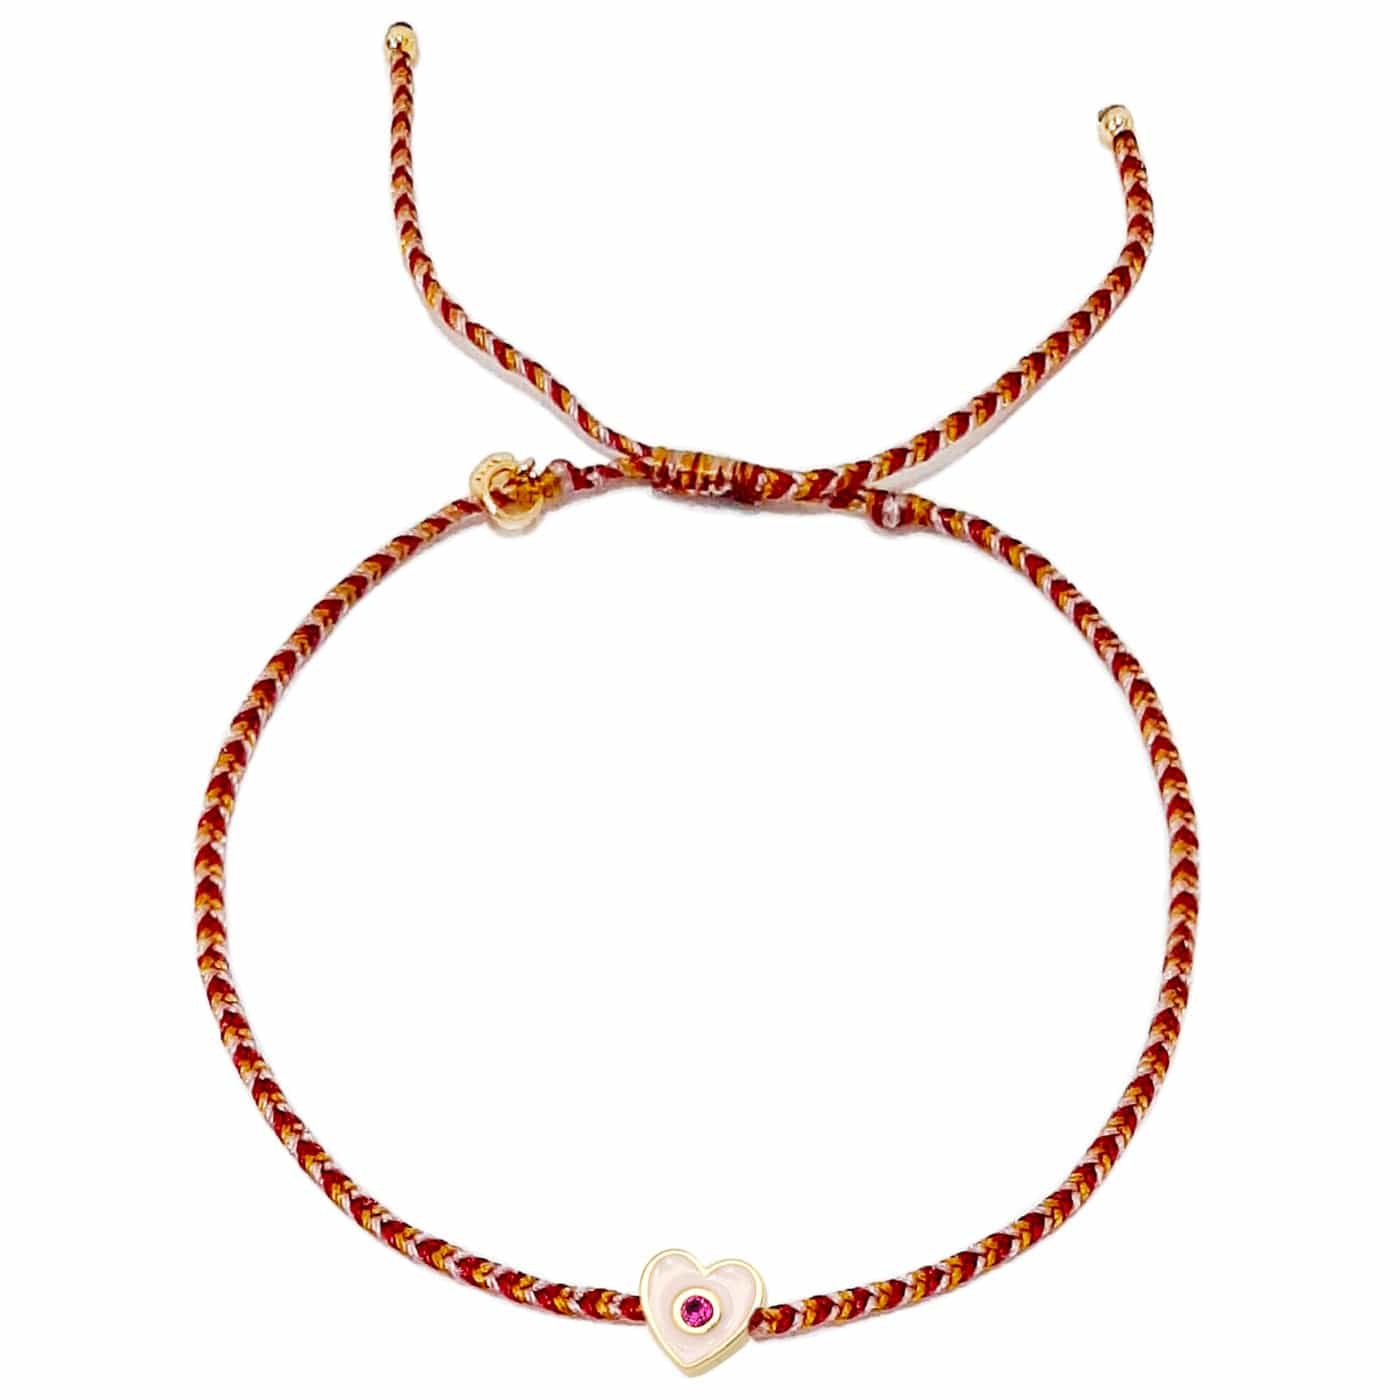 TAI JEWELRY Bracelet Heart Handmade Woven Bracelet With Enamel Charm